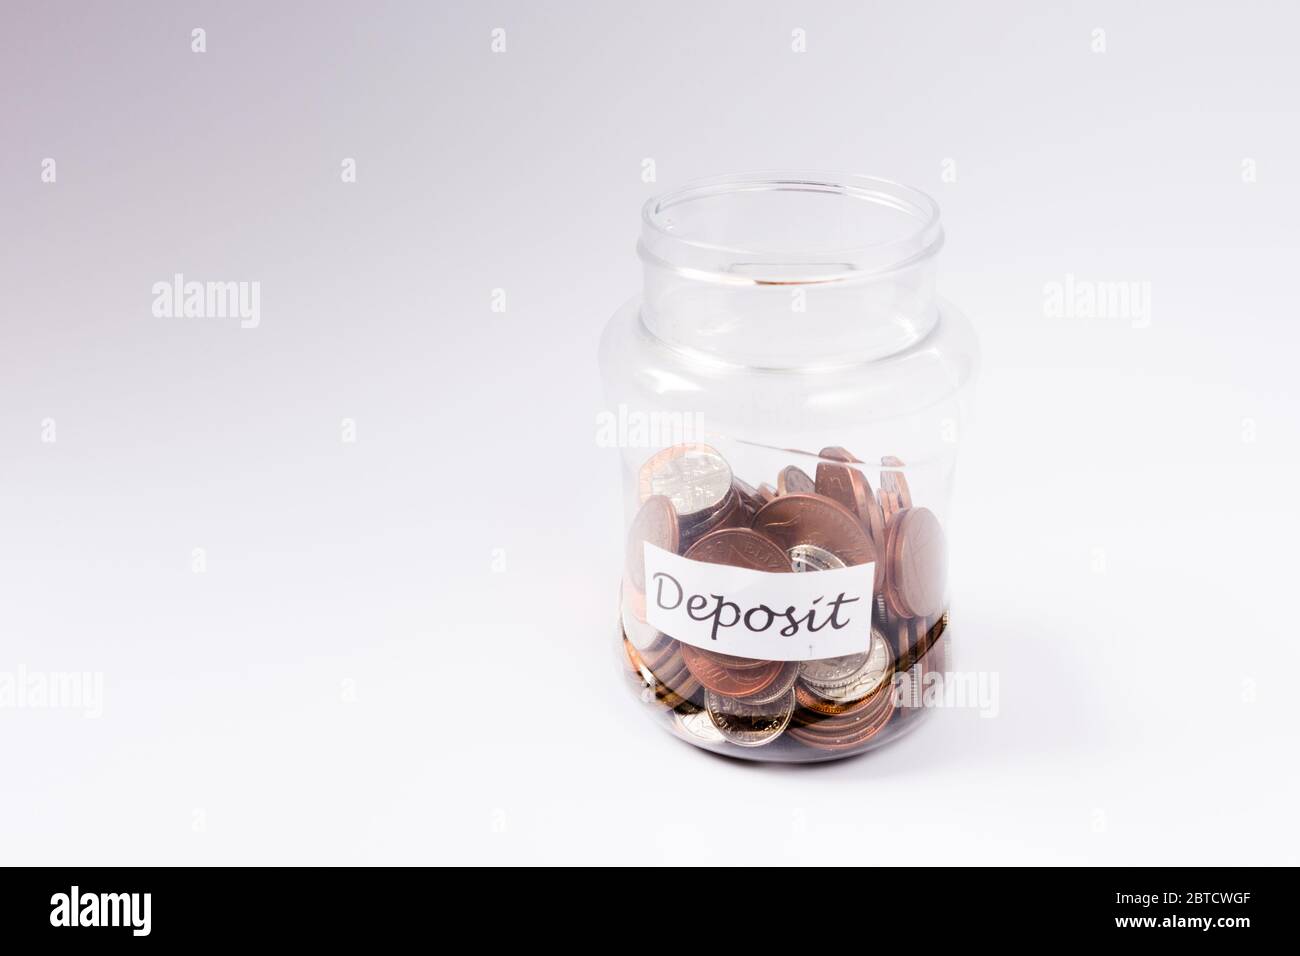 Deposit saving coin jar concept symbolising a saving for car, home, education etc. Stock Photo